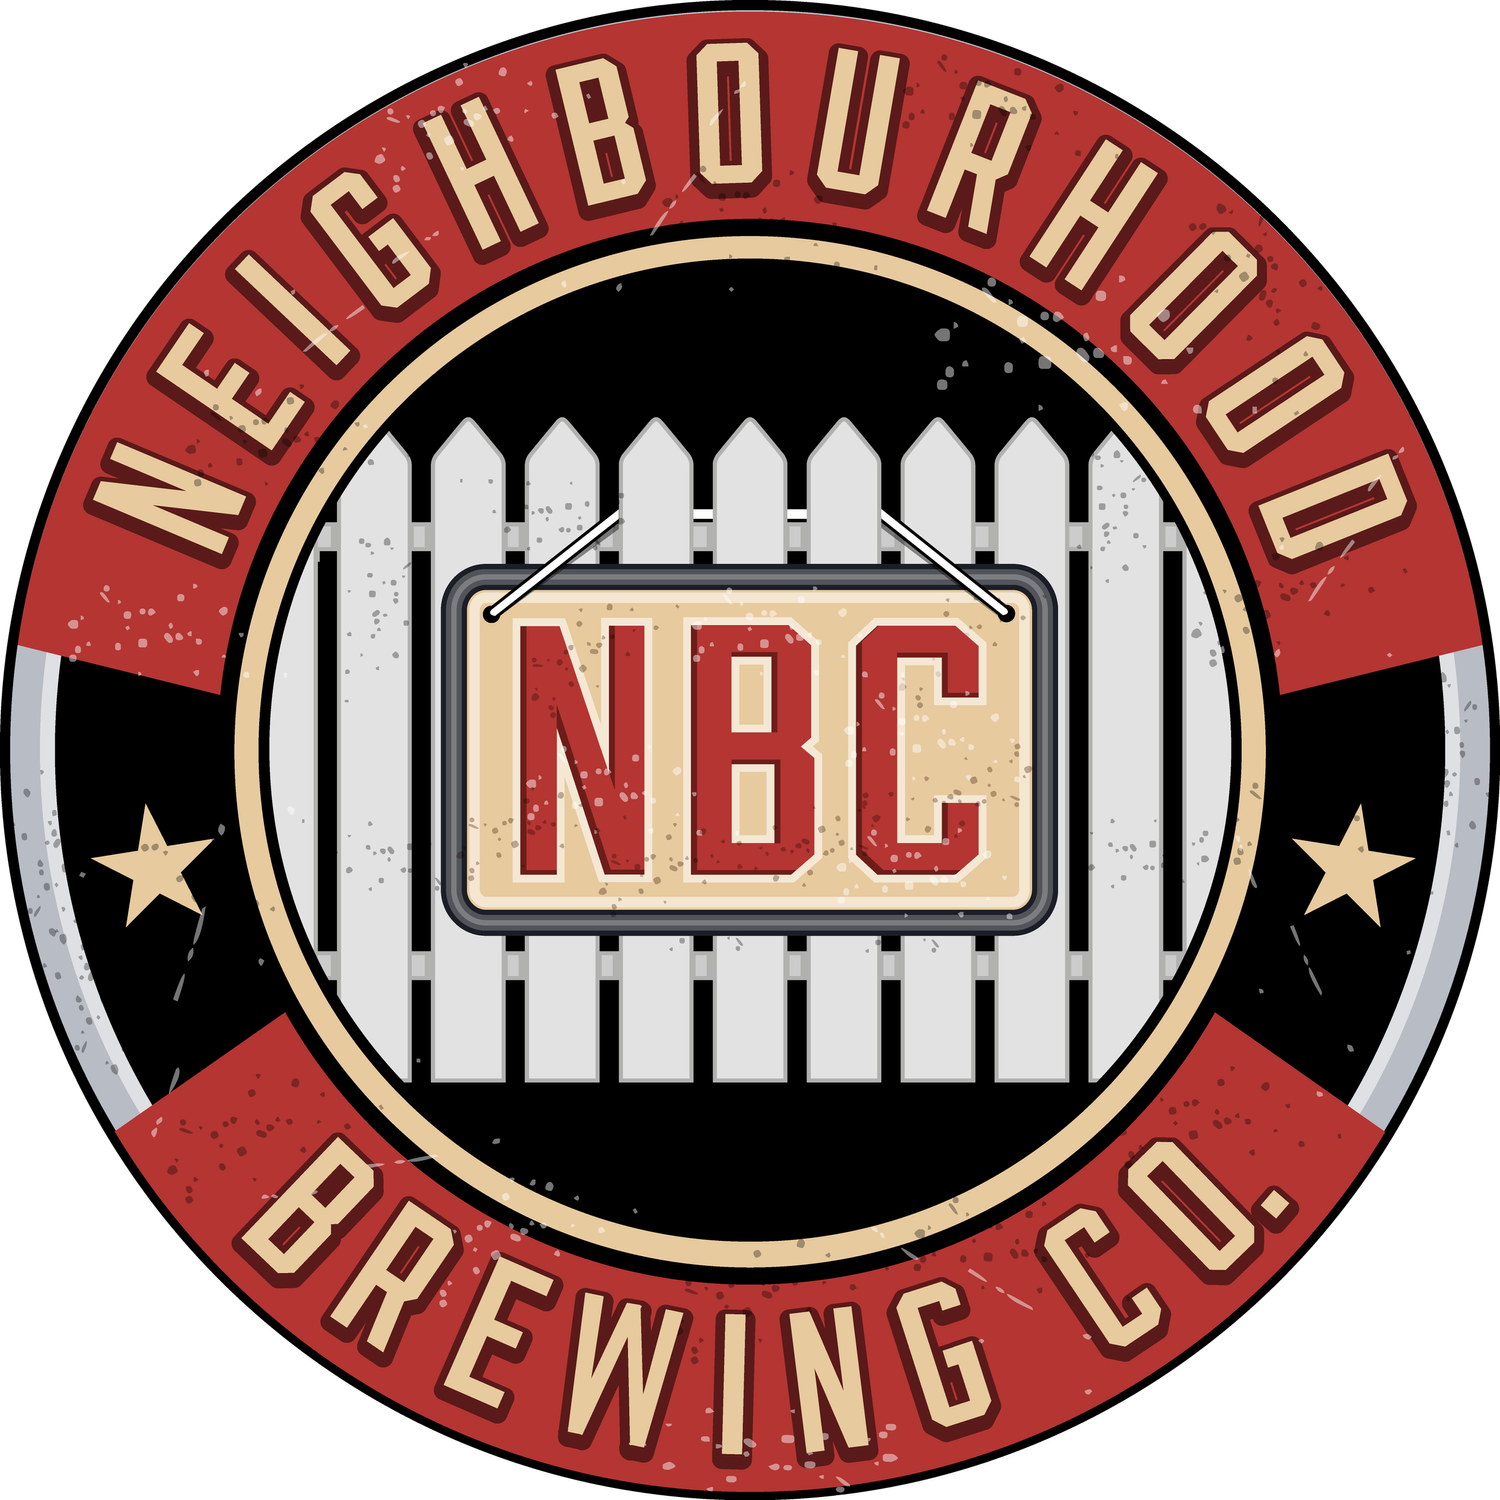 Neighbourhood Brewing Co | NEIPA | Fresh Wort Kit